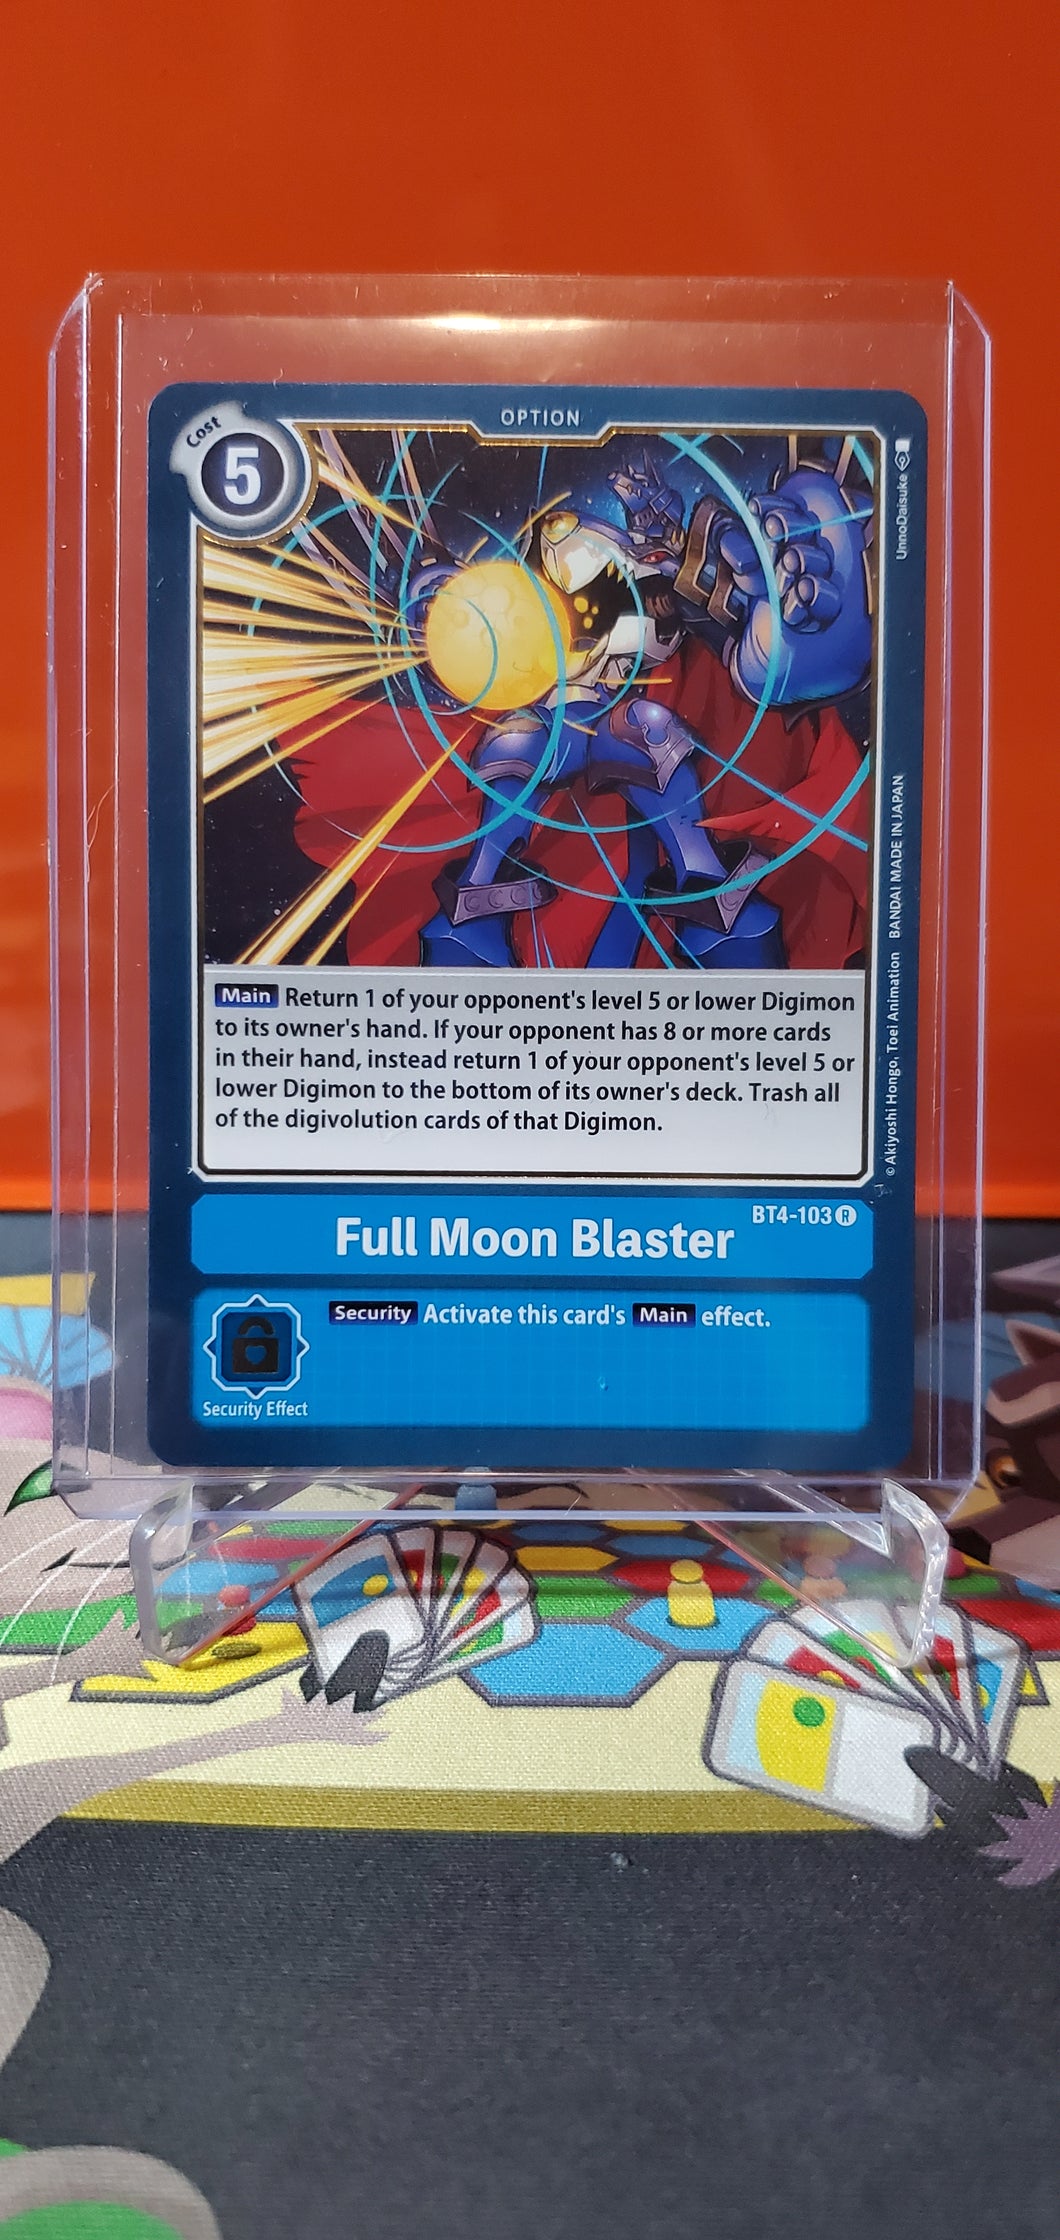 Full Moon Blaster